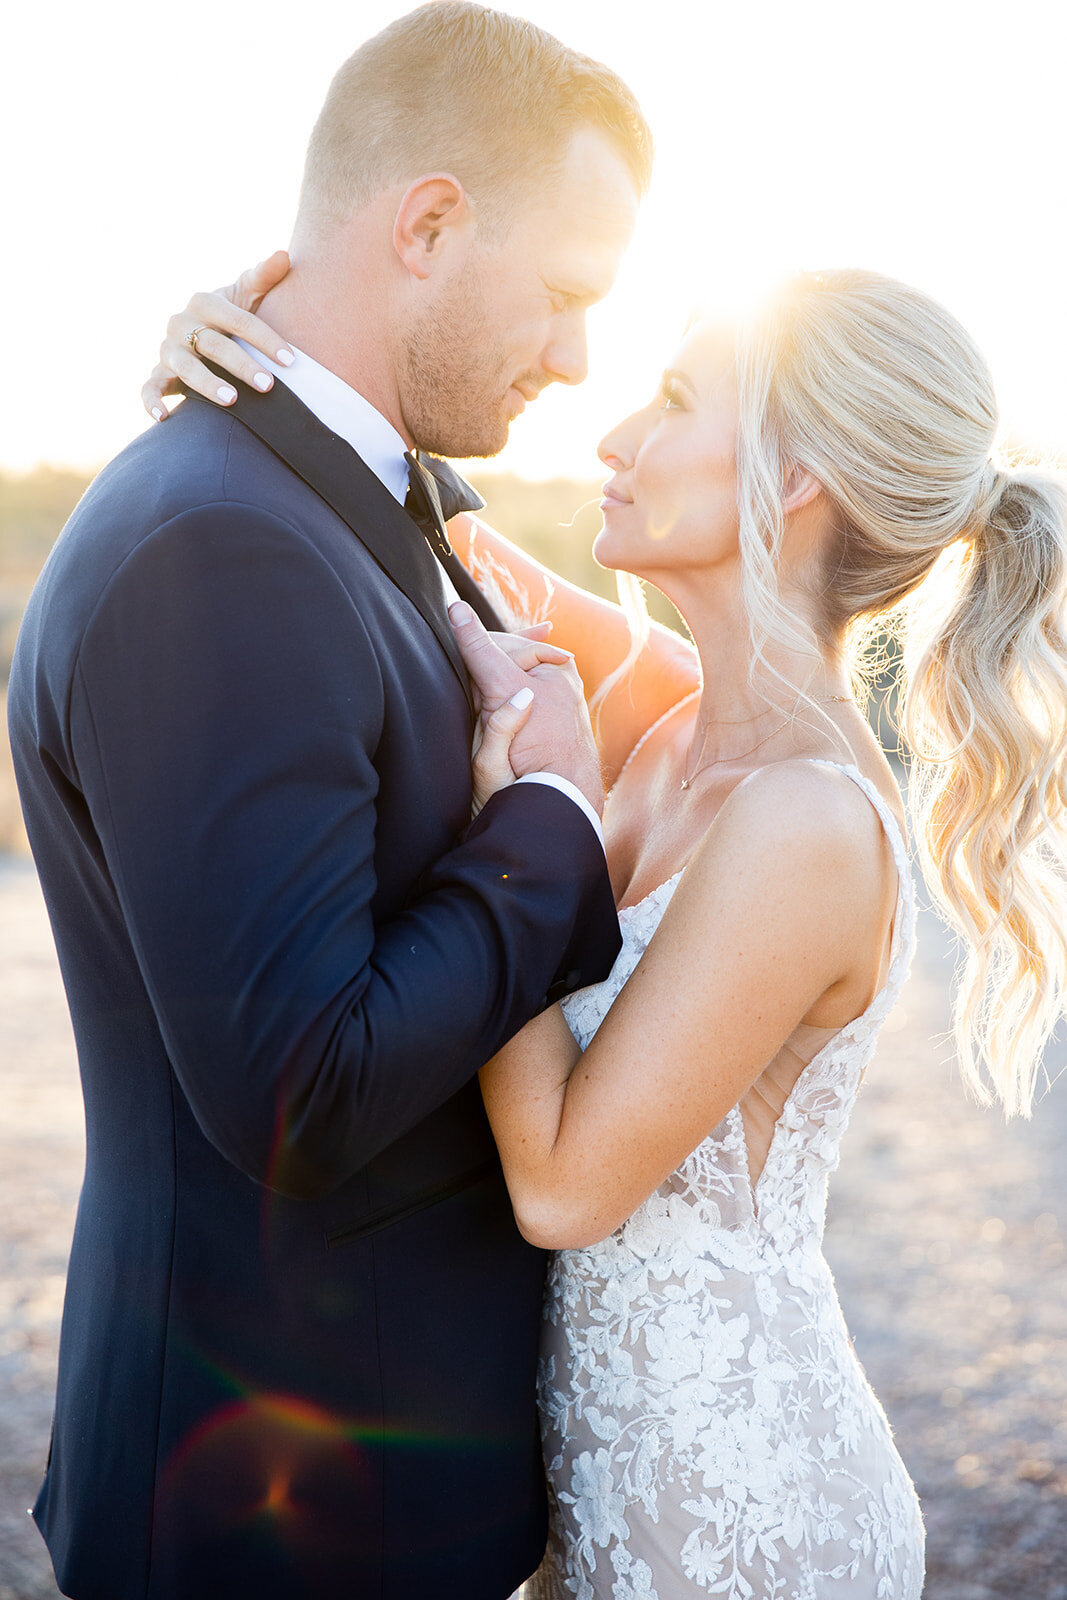 Karlie Colleen Photography - Ashley & Grant Wedding - The Paseo - Phoenix Arizona-808